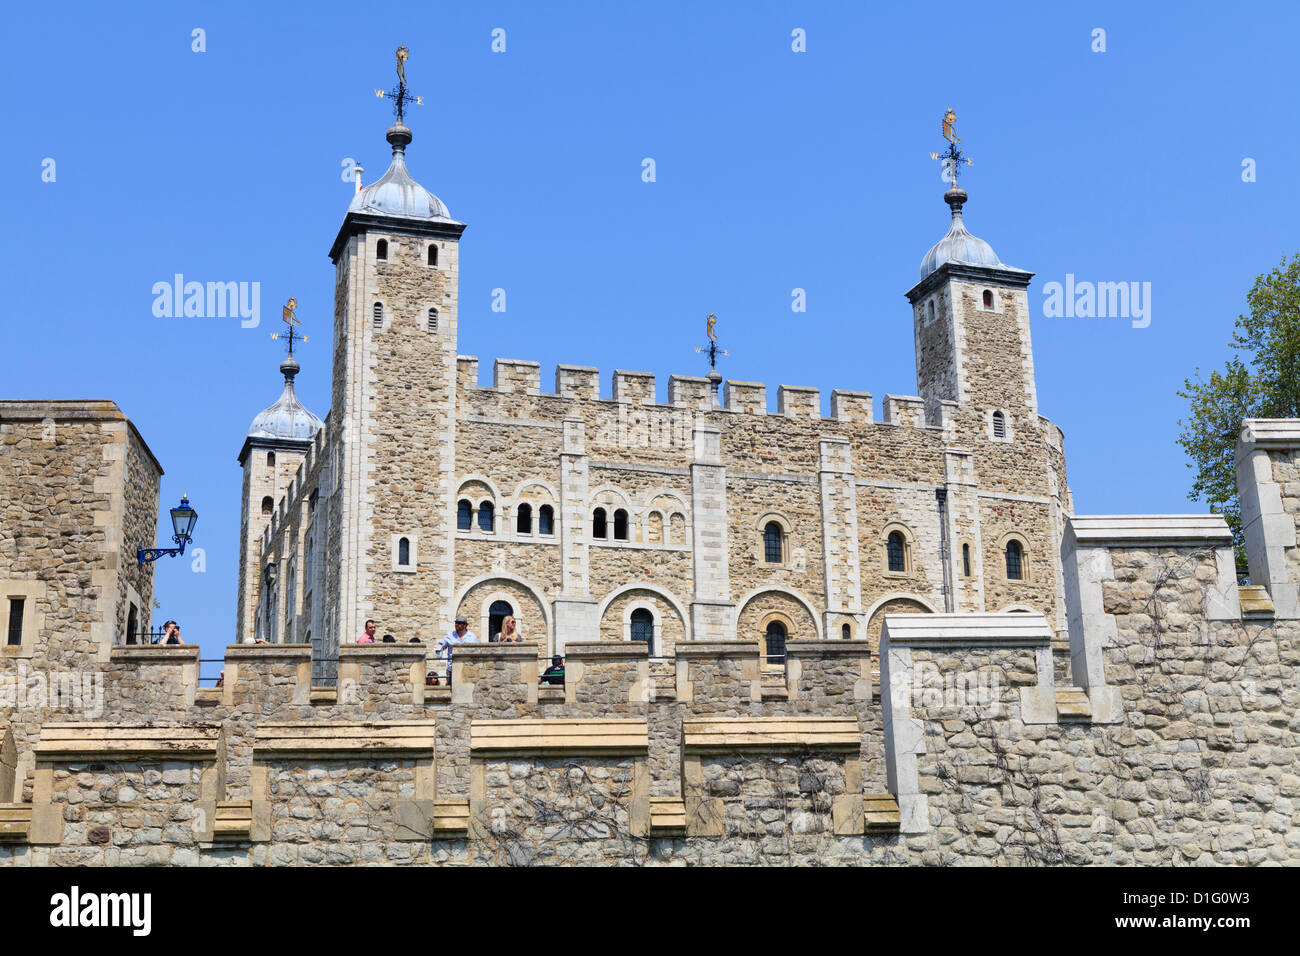 The White Tower, Tower of London, UNESCO World Heritage Site, London, England, United Kingdom, Europe Stock Photo